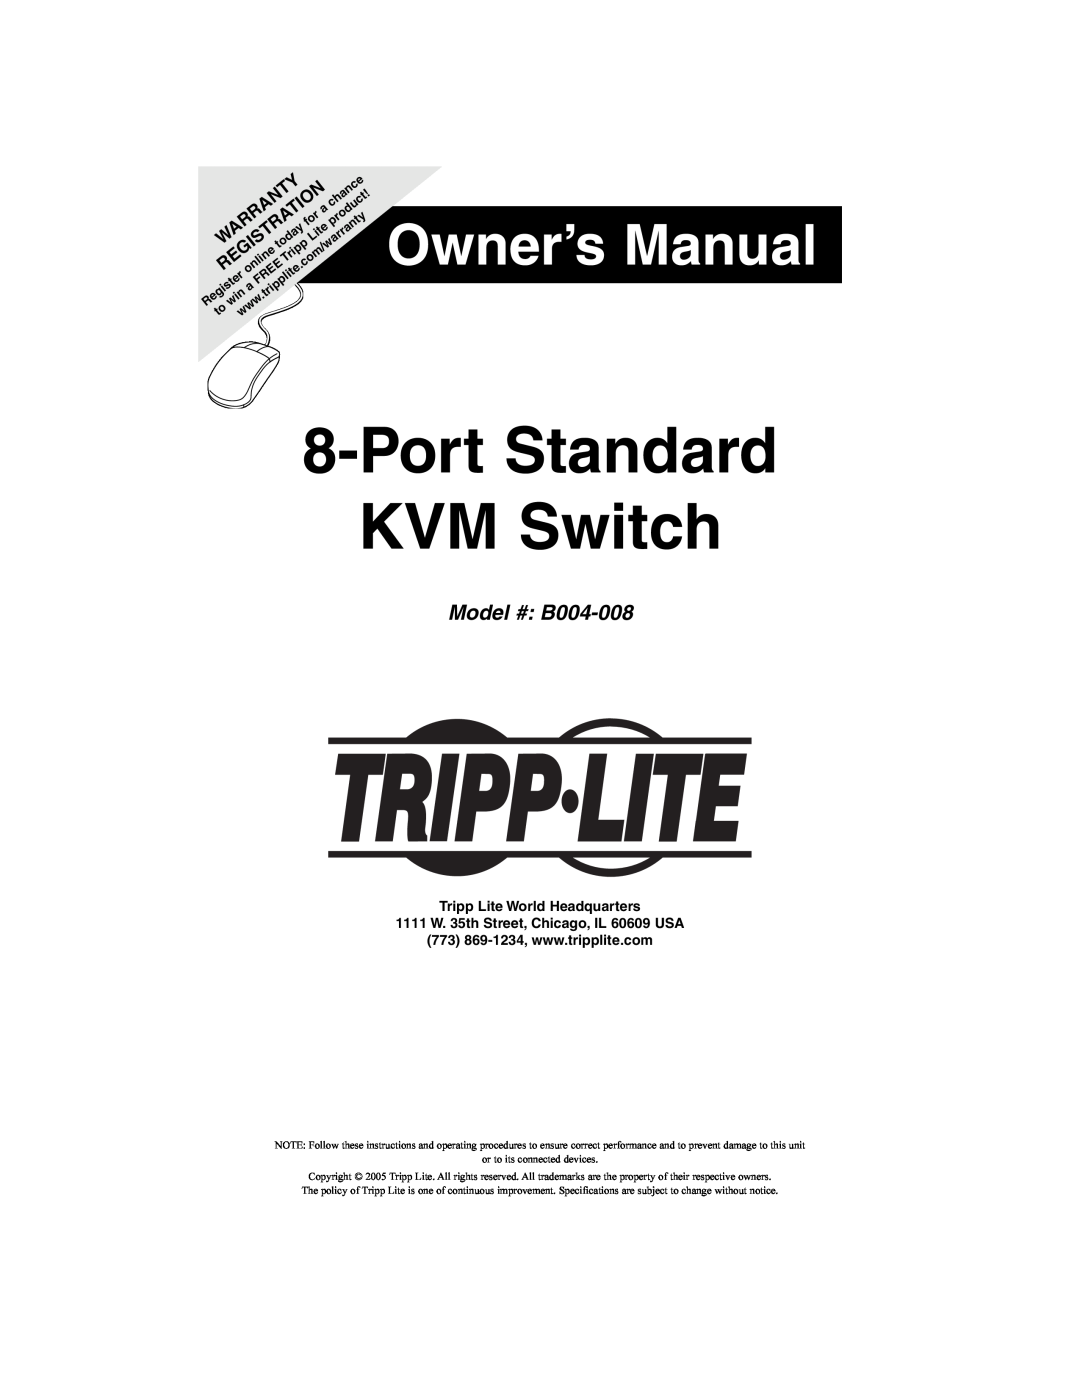 Tripp Lite owner manual Port Standard KVM Switch, Owner’s Manual, Model # B004-008, Tripp Lite World Headquarters, Free 